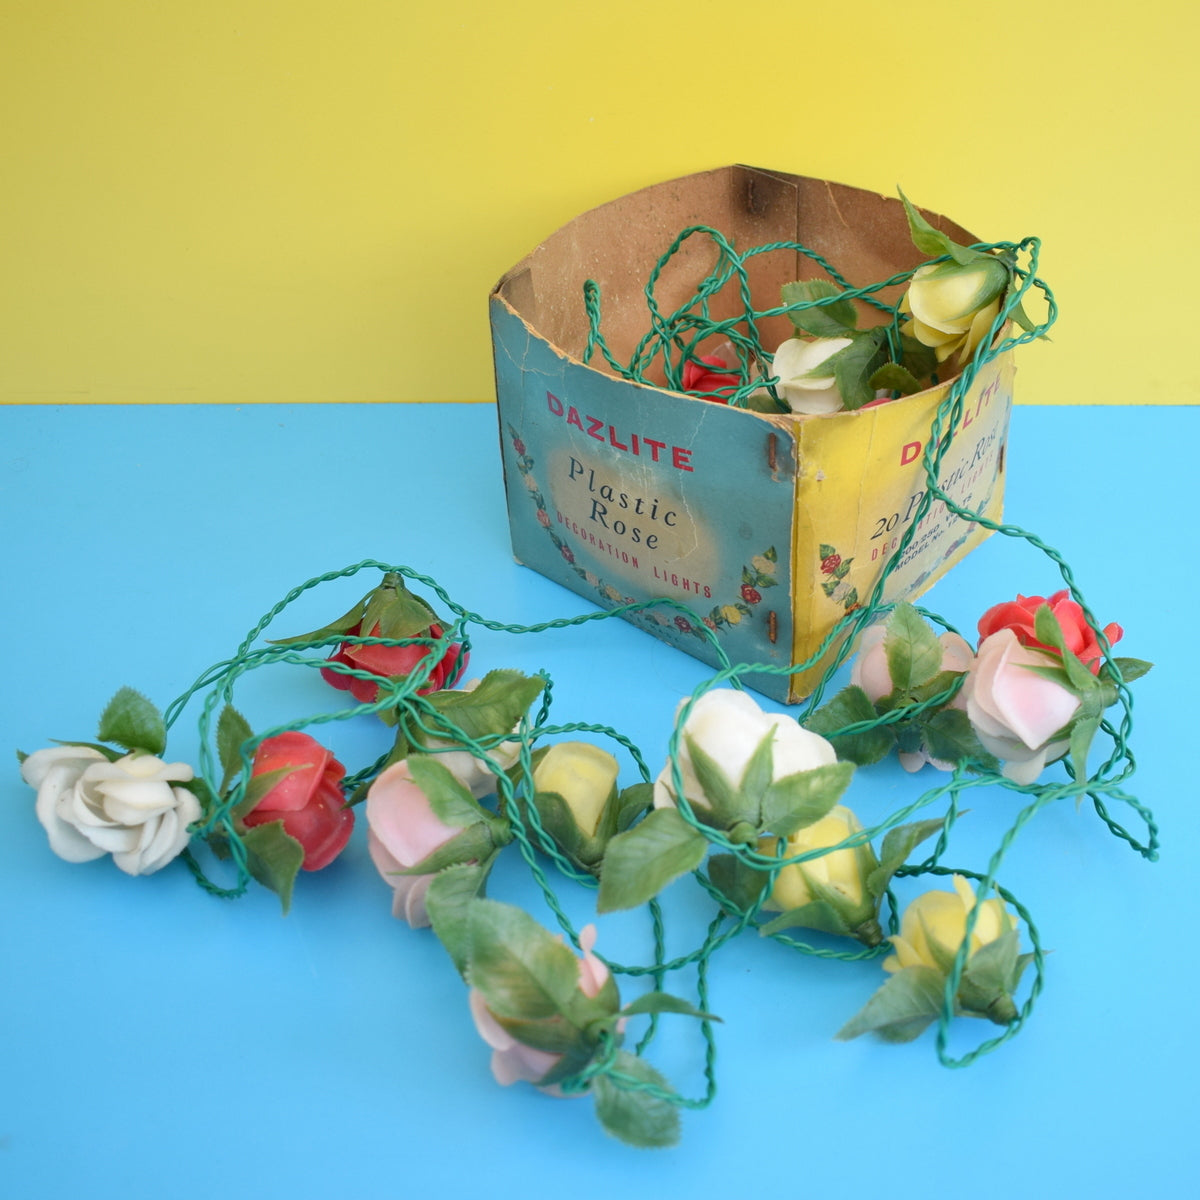 Vintage 1950s Dazlite Plastic Rose String Lights - Boxed - Decorative